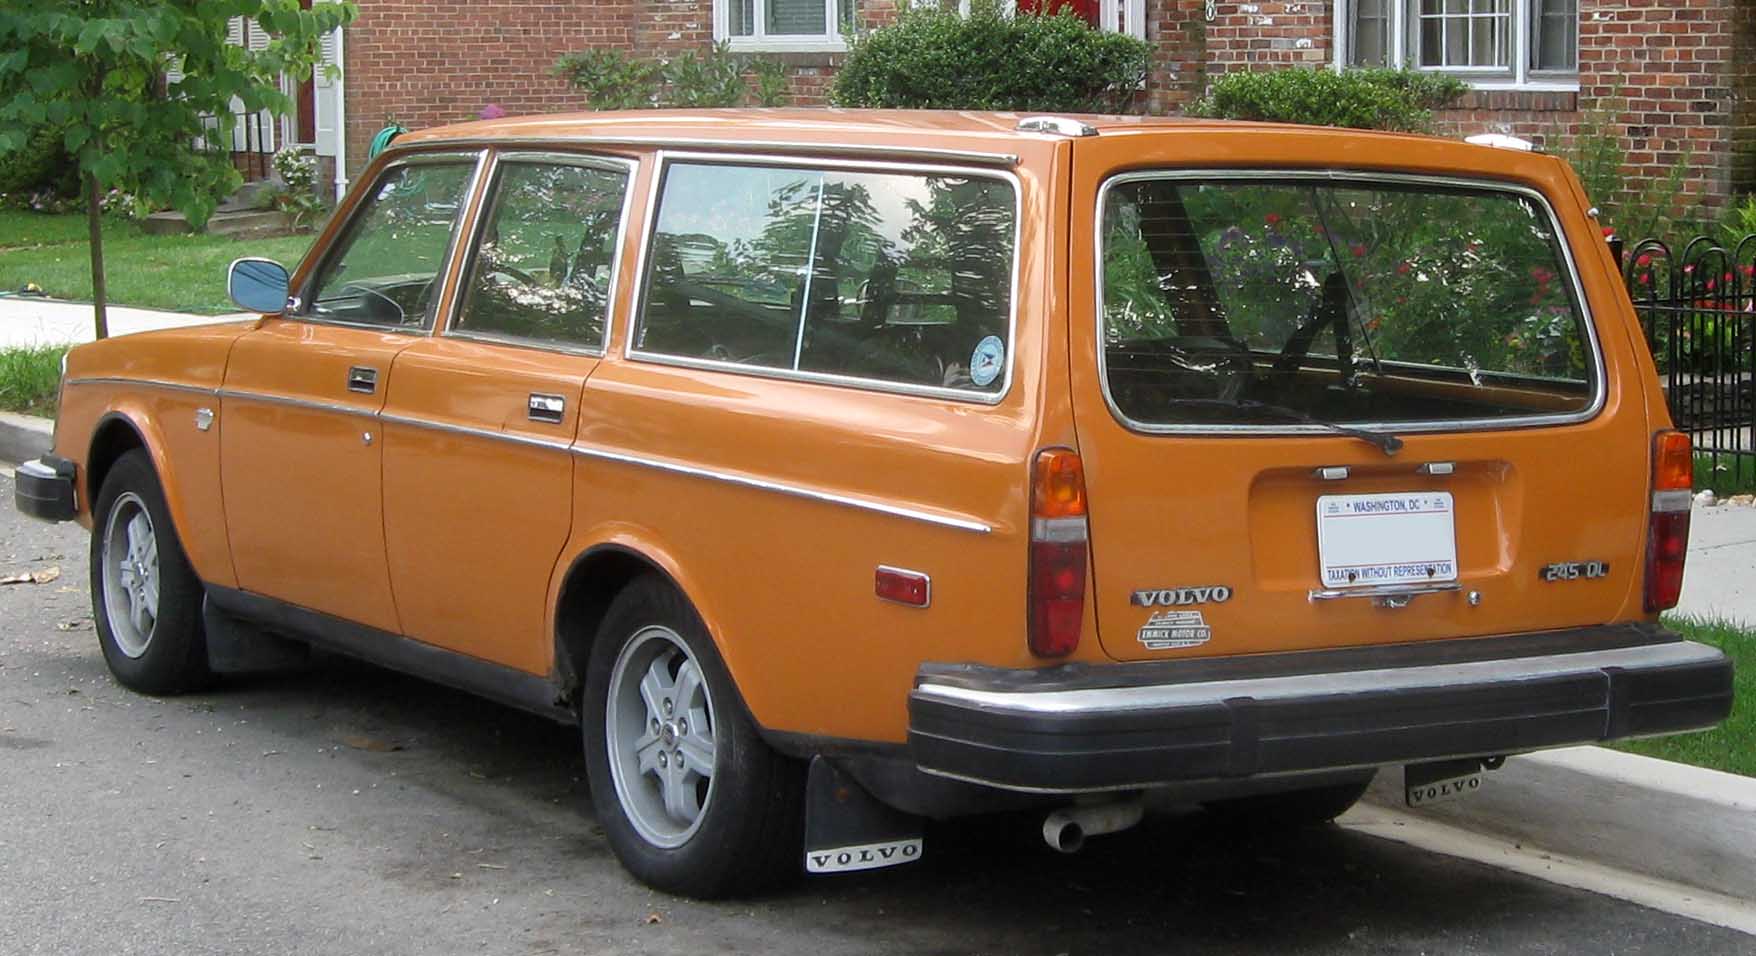 Dossier: 1975 Volvo 245 DL wagon arrière1 15-07-2010.